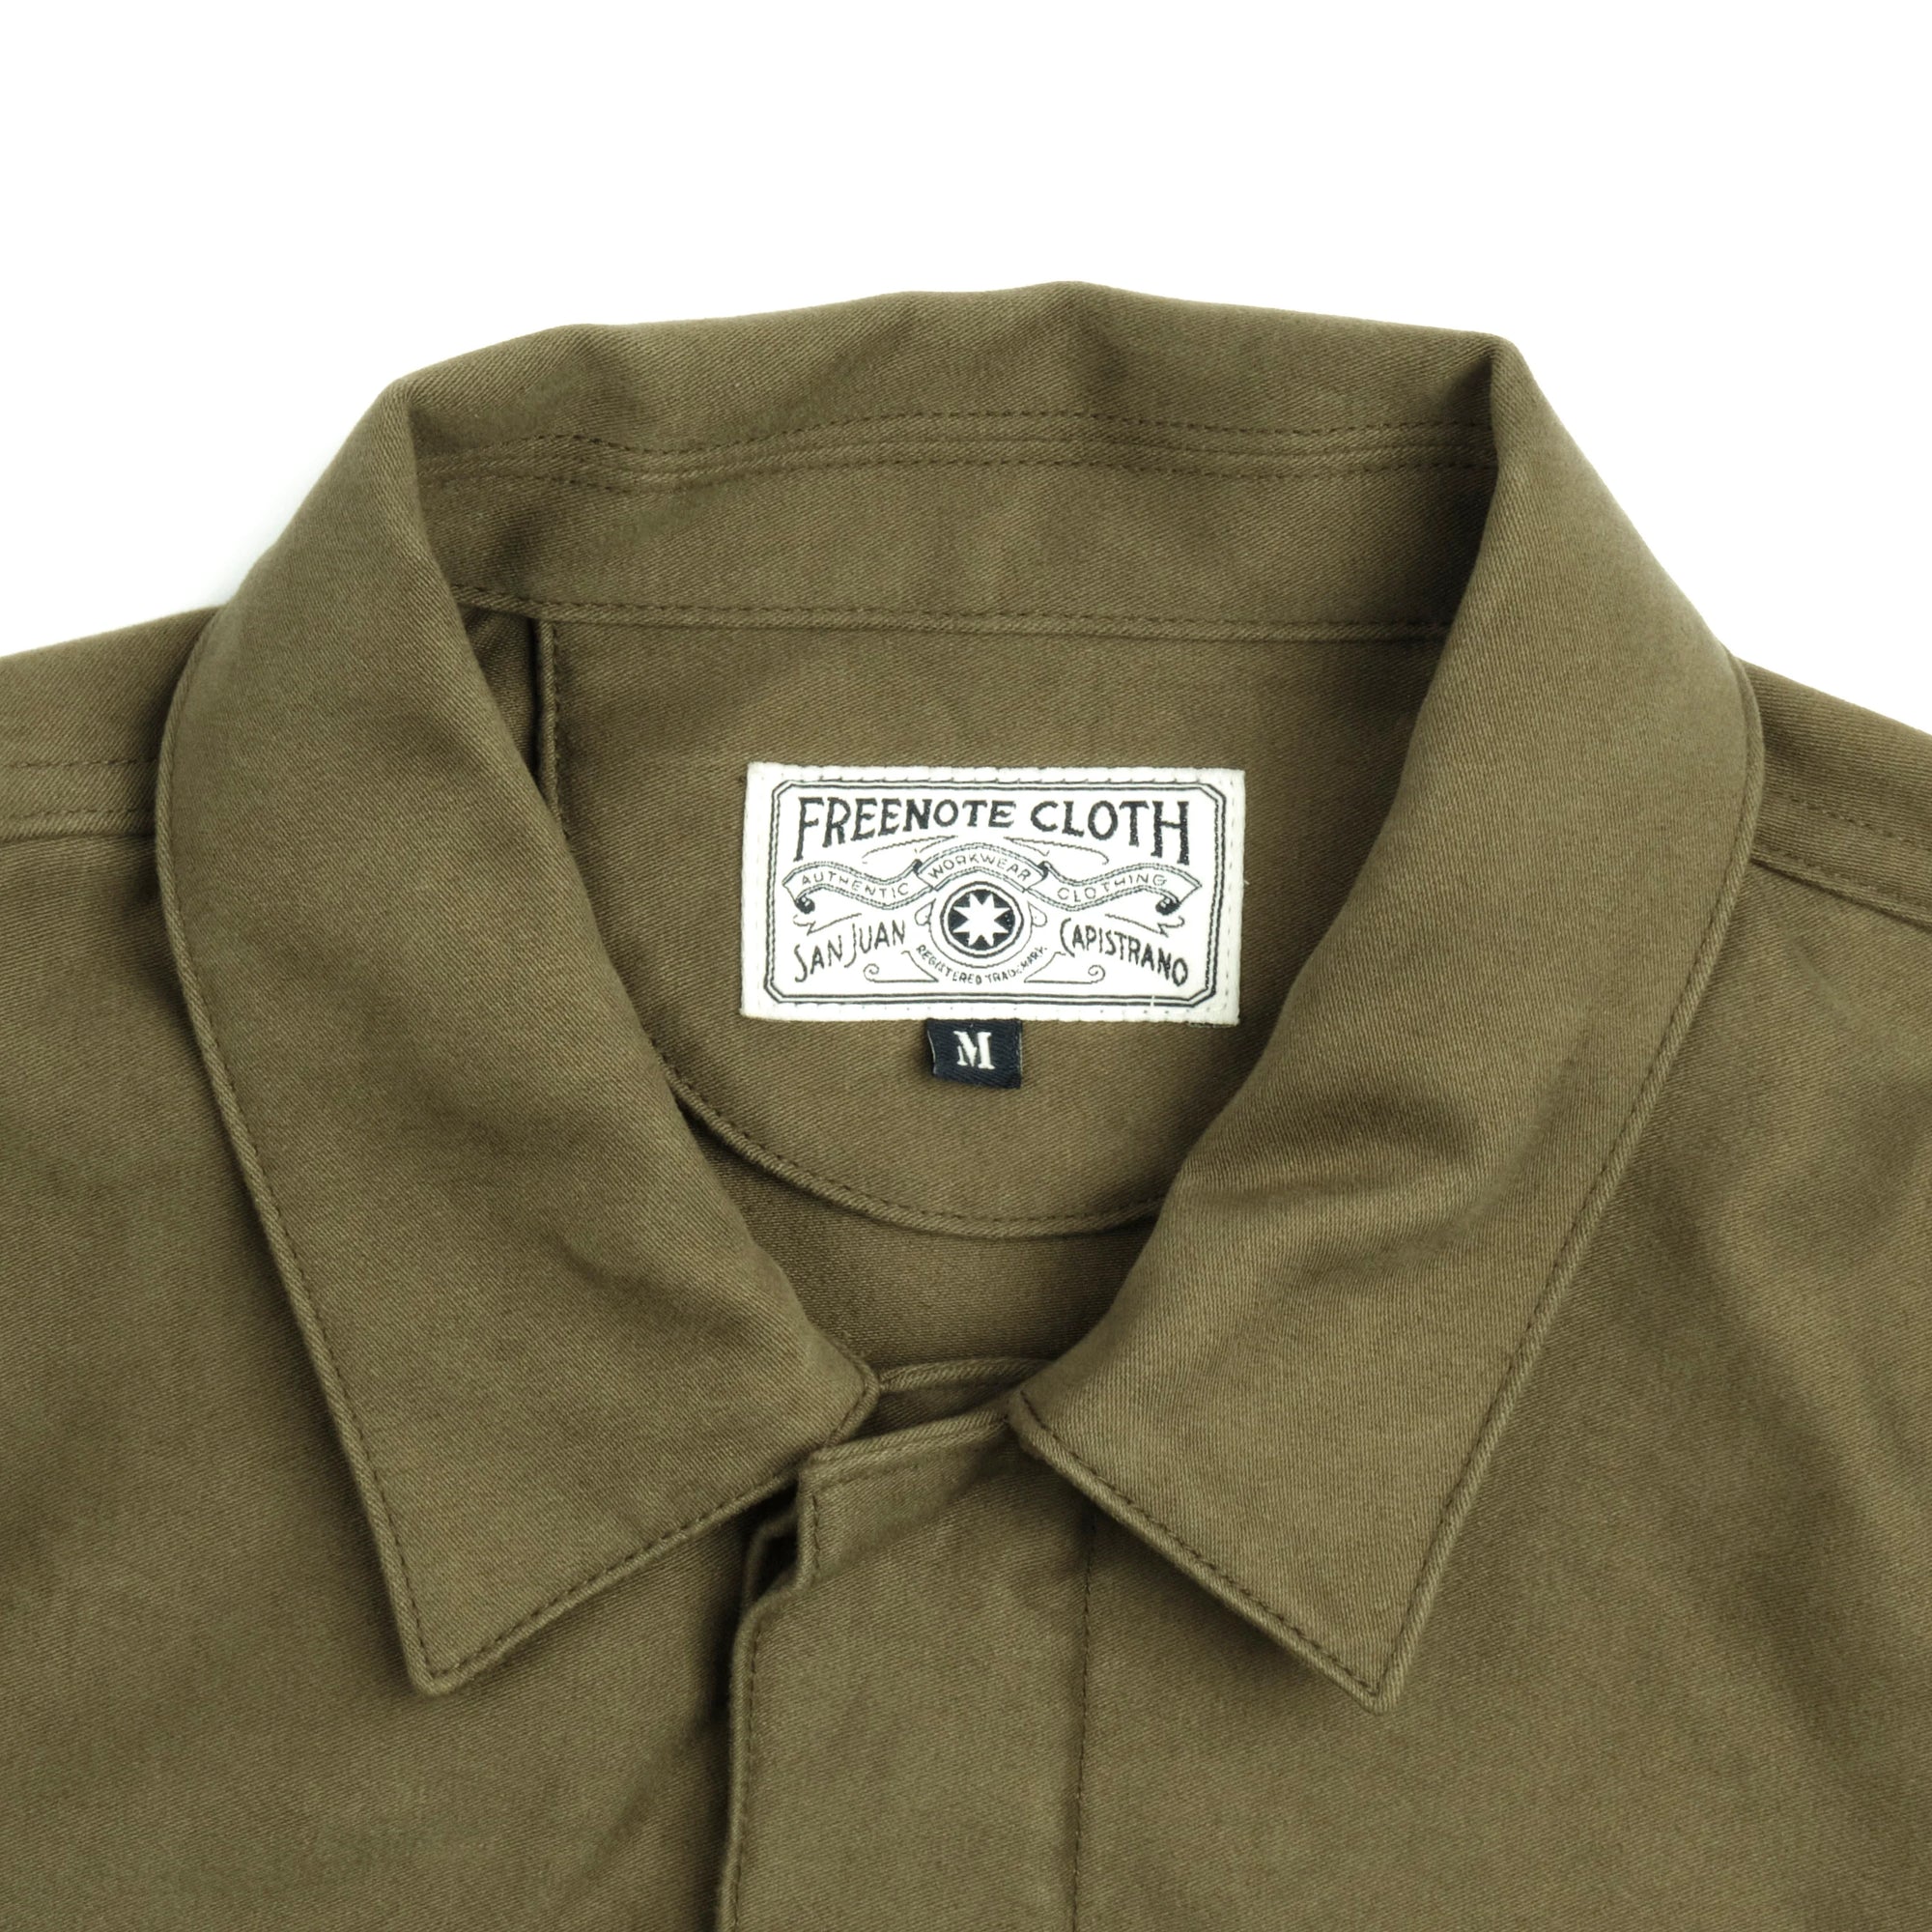 Freenote Cloth CC-1 in Olive